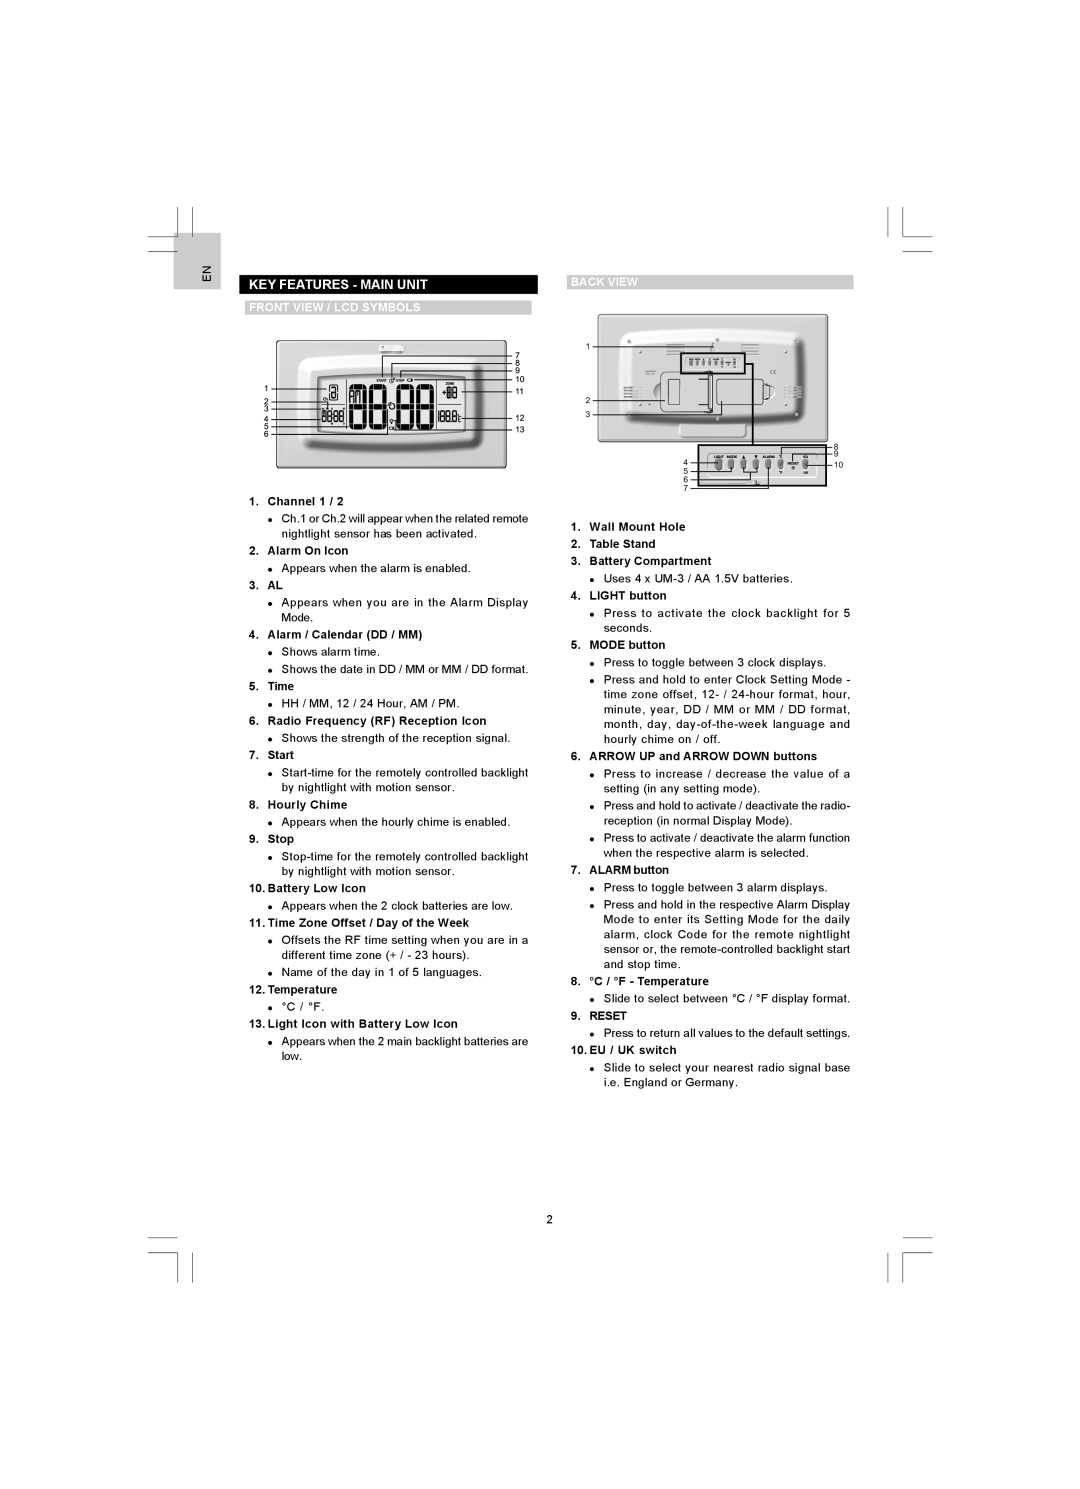 Oregon Scientific NR868, JMR868 user manual Key Features - Main Unitback View, Front View / Lcd Symbols 